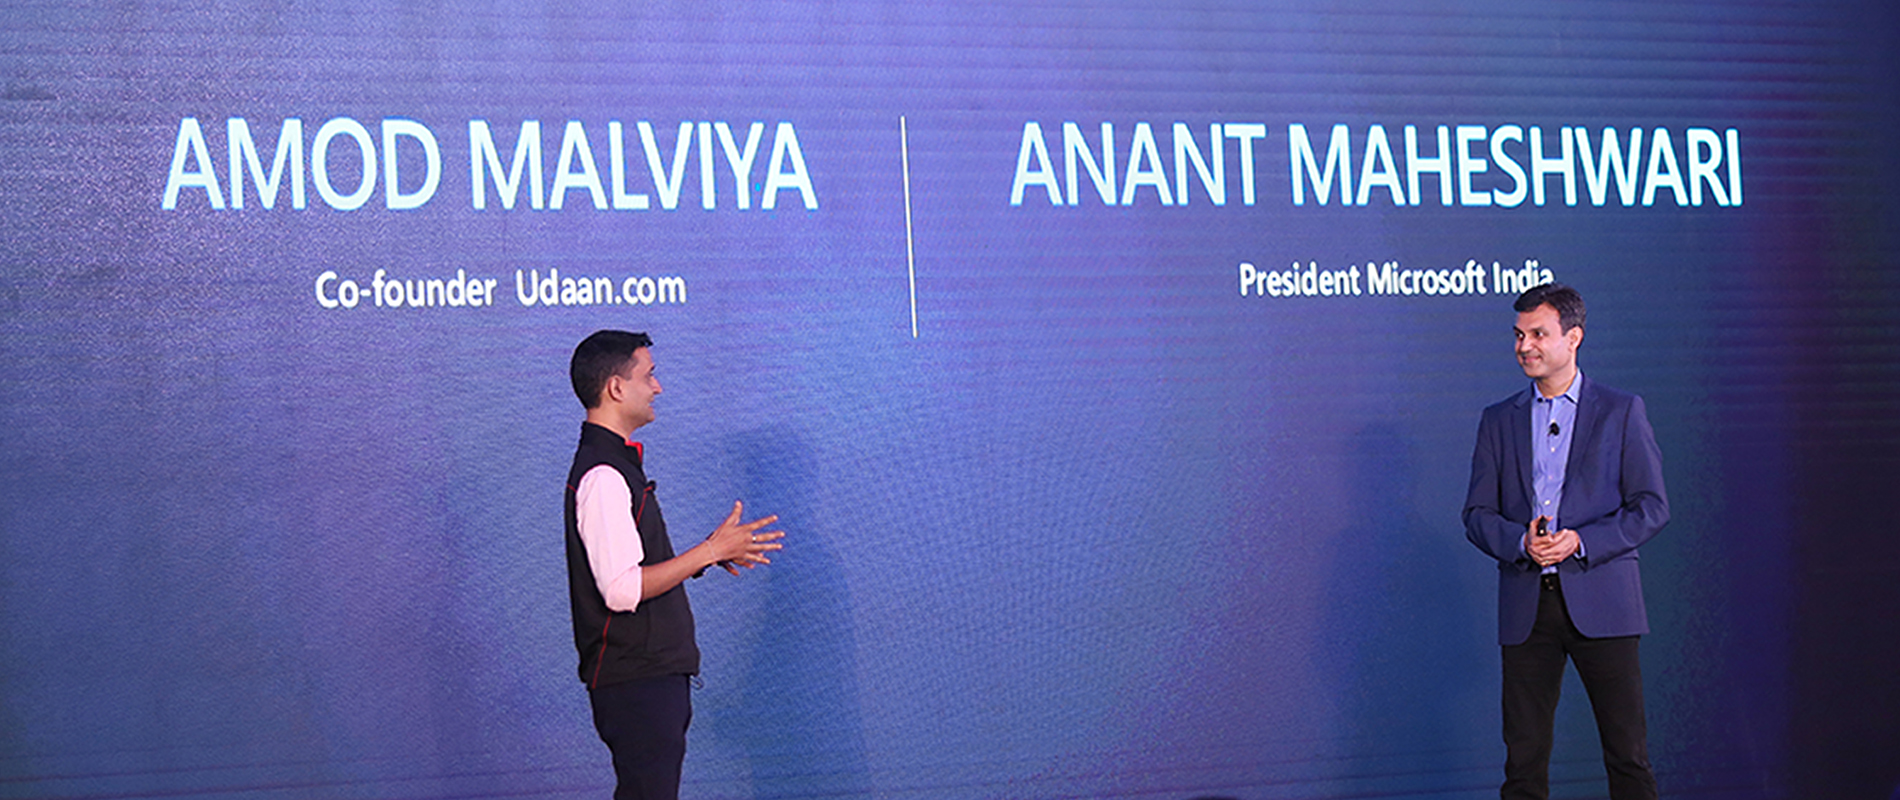 Anant Maheshwari, President, Microsoft India and Amod Malviya, co-founder of Udaan in a conversation at Bengaluru Tech Summit